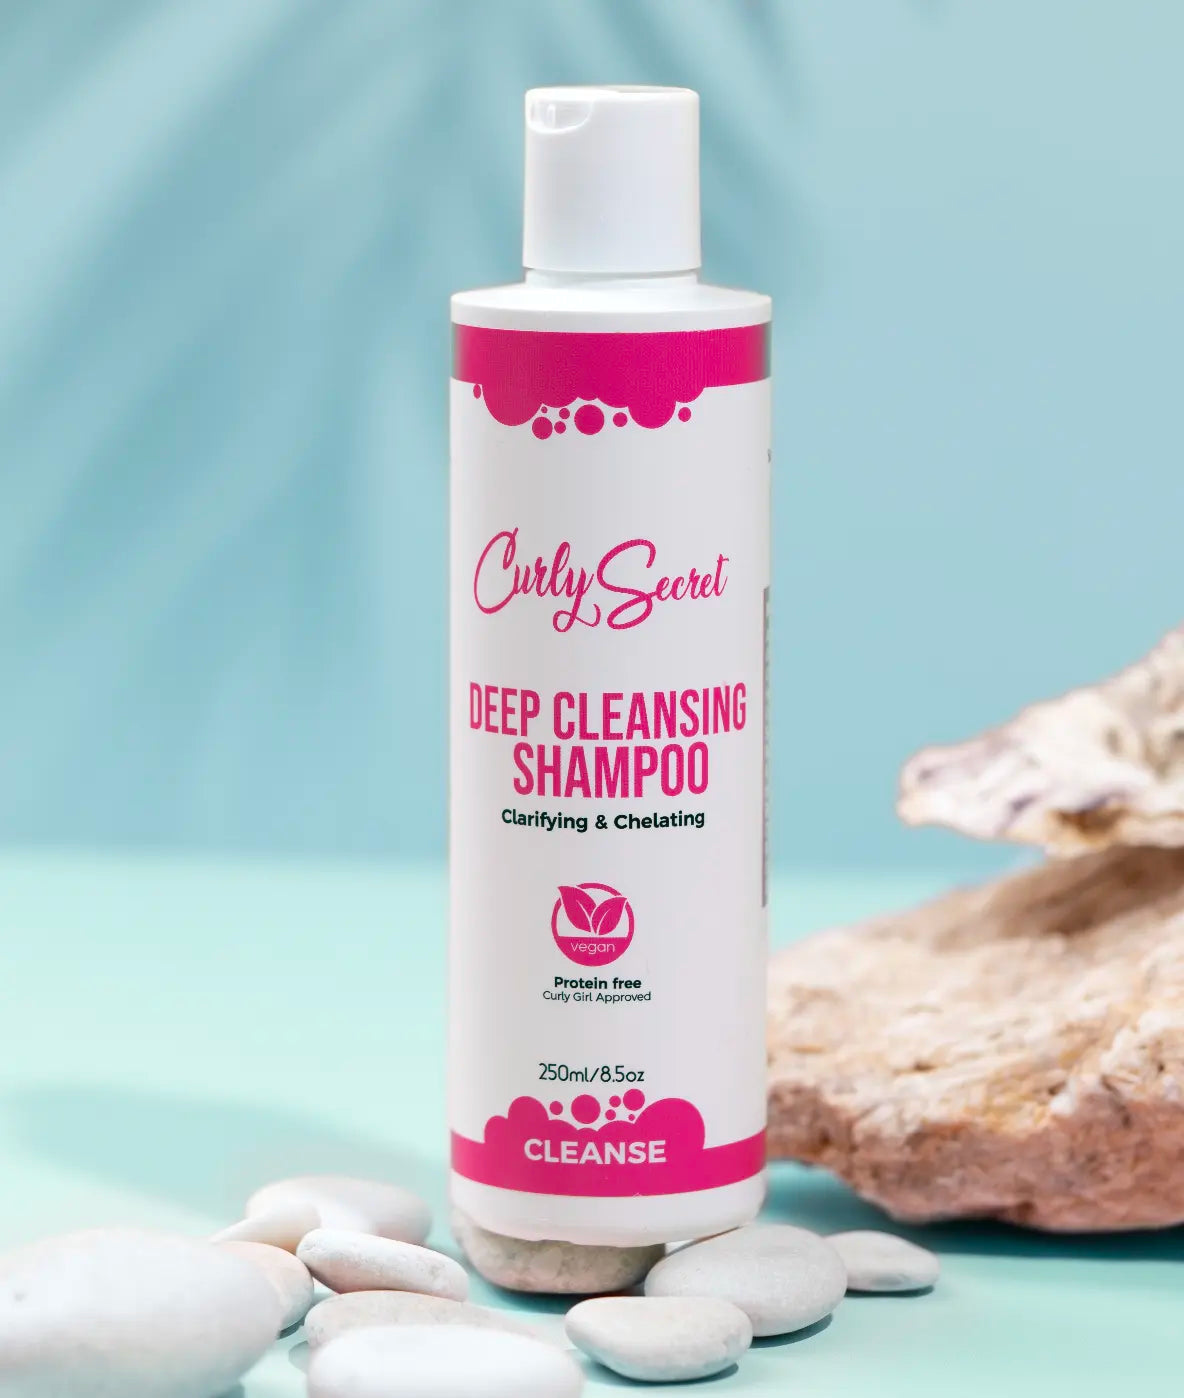 Curly Secret Deep Cleansing Shampoo